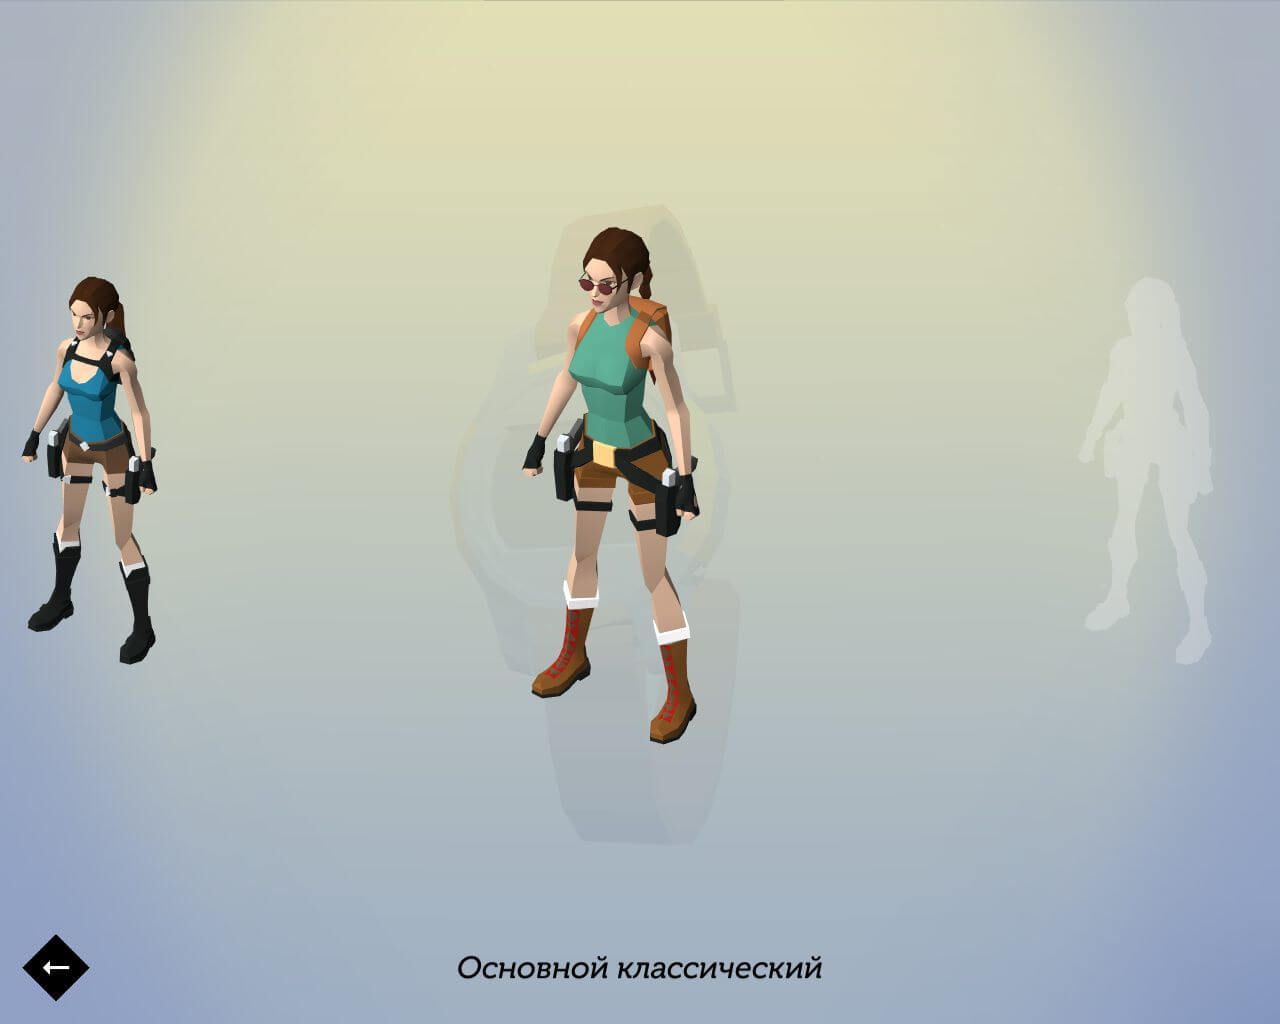 Lara Croft GO: The Mirror of Spirits